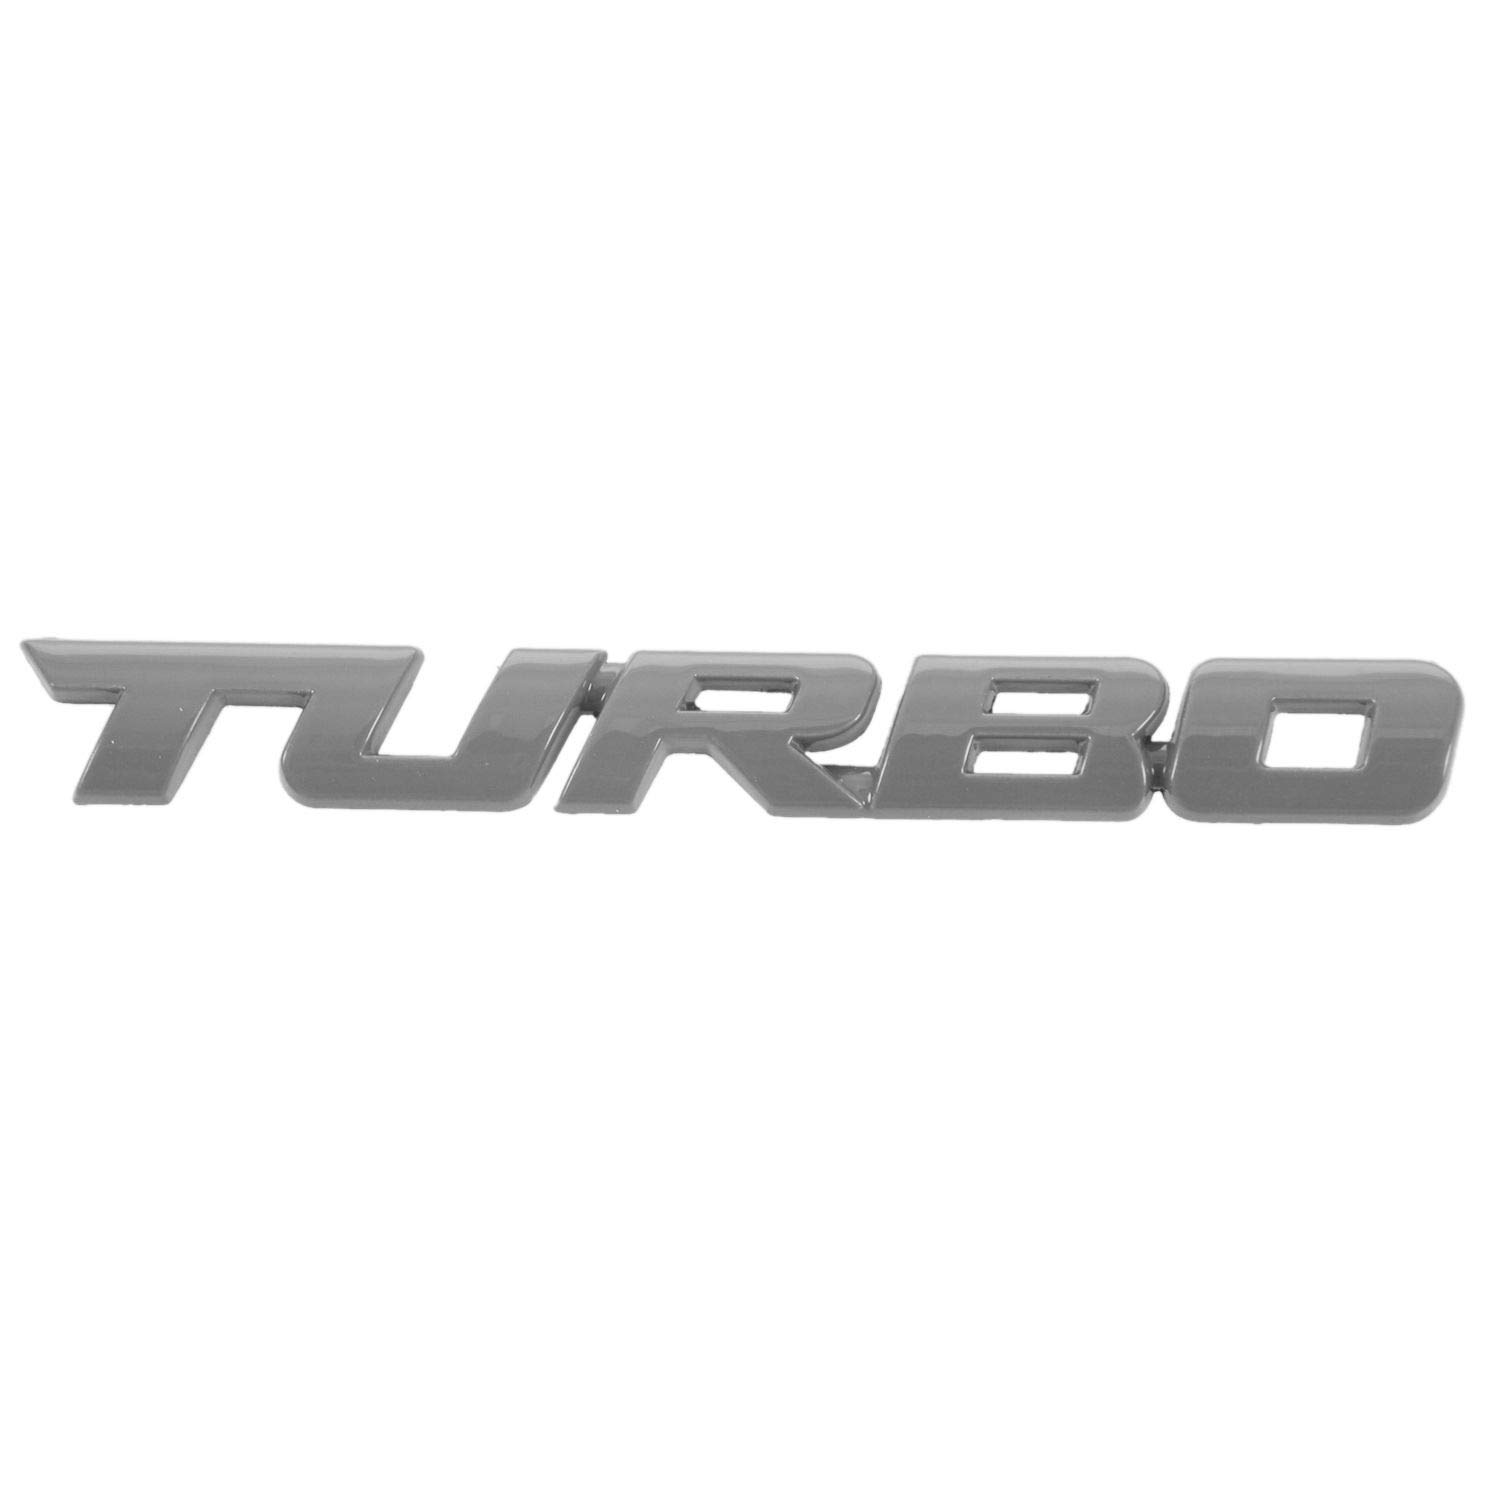 OUHUAN Turbo Universal Motorrad 3D Metall Emblem Abzeichen Aufkleber, Silber von OUHUAN